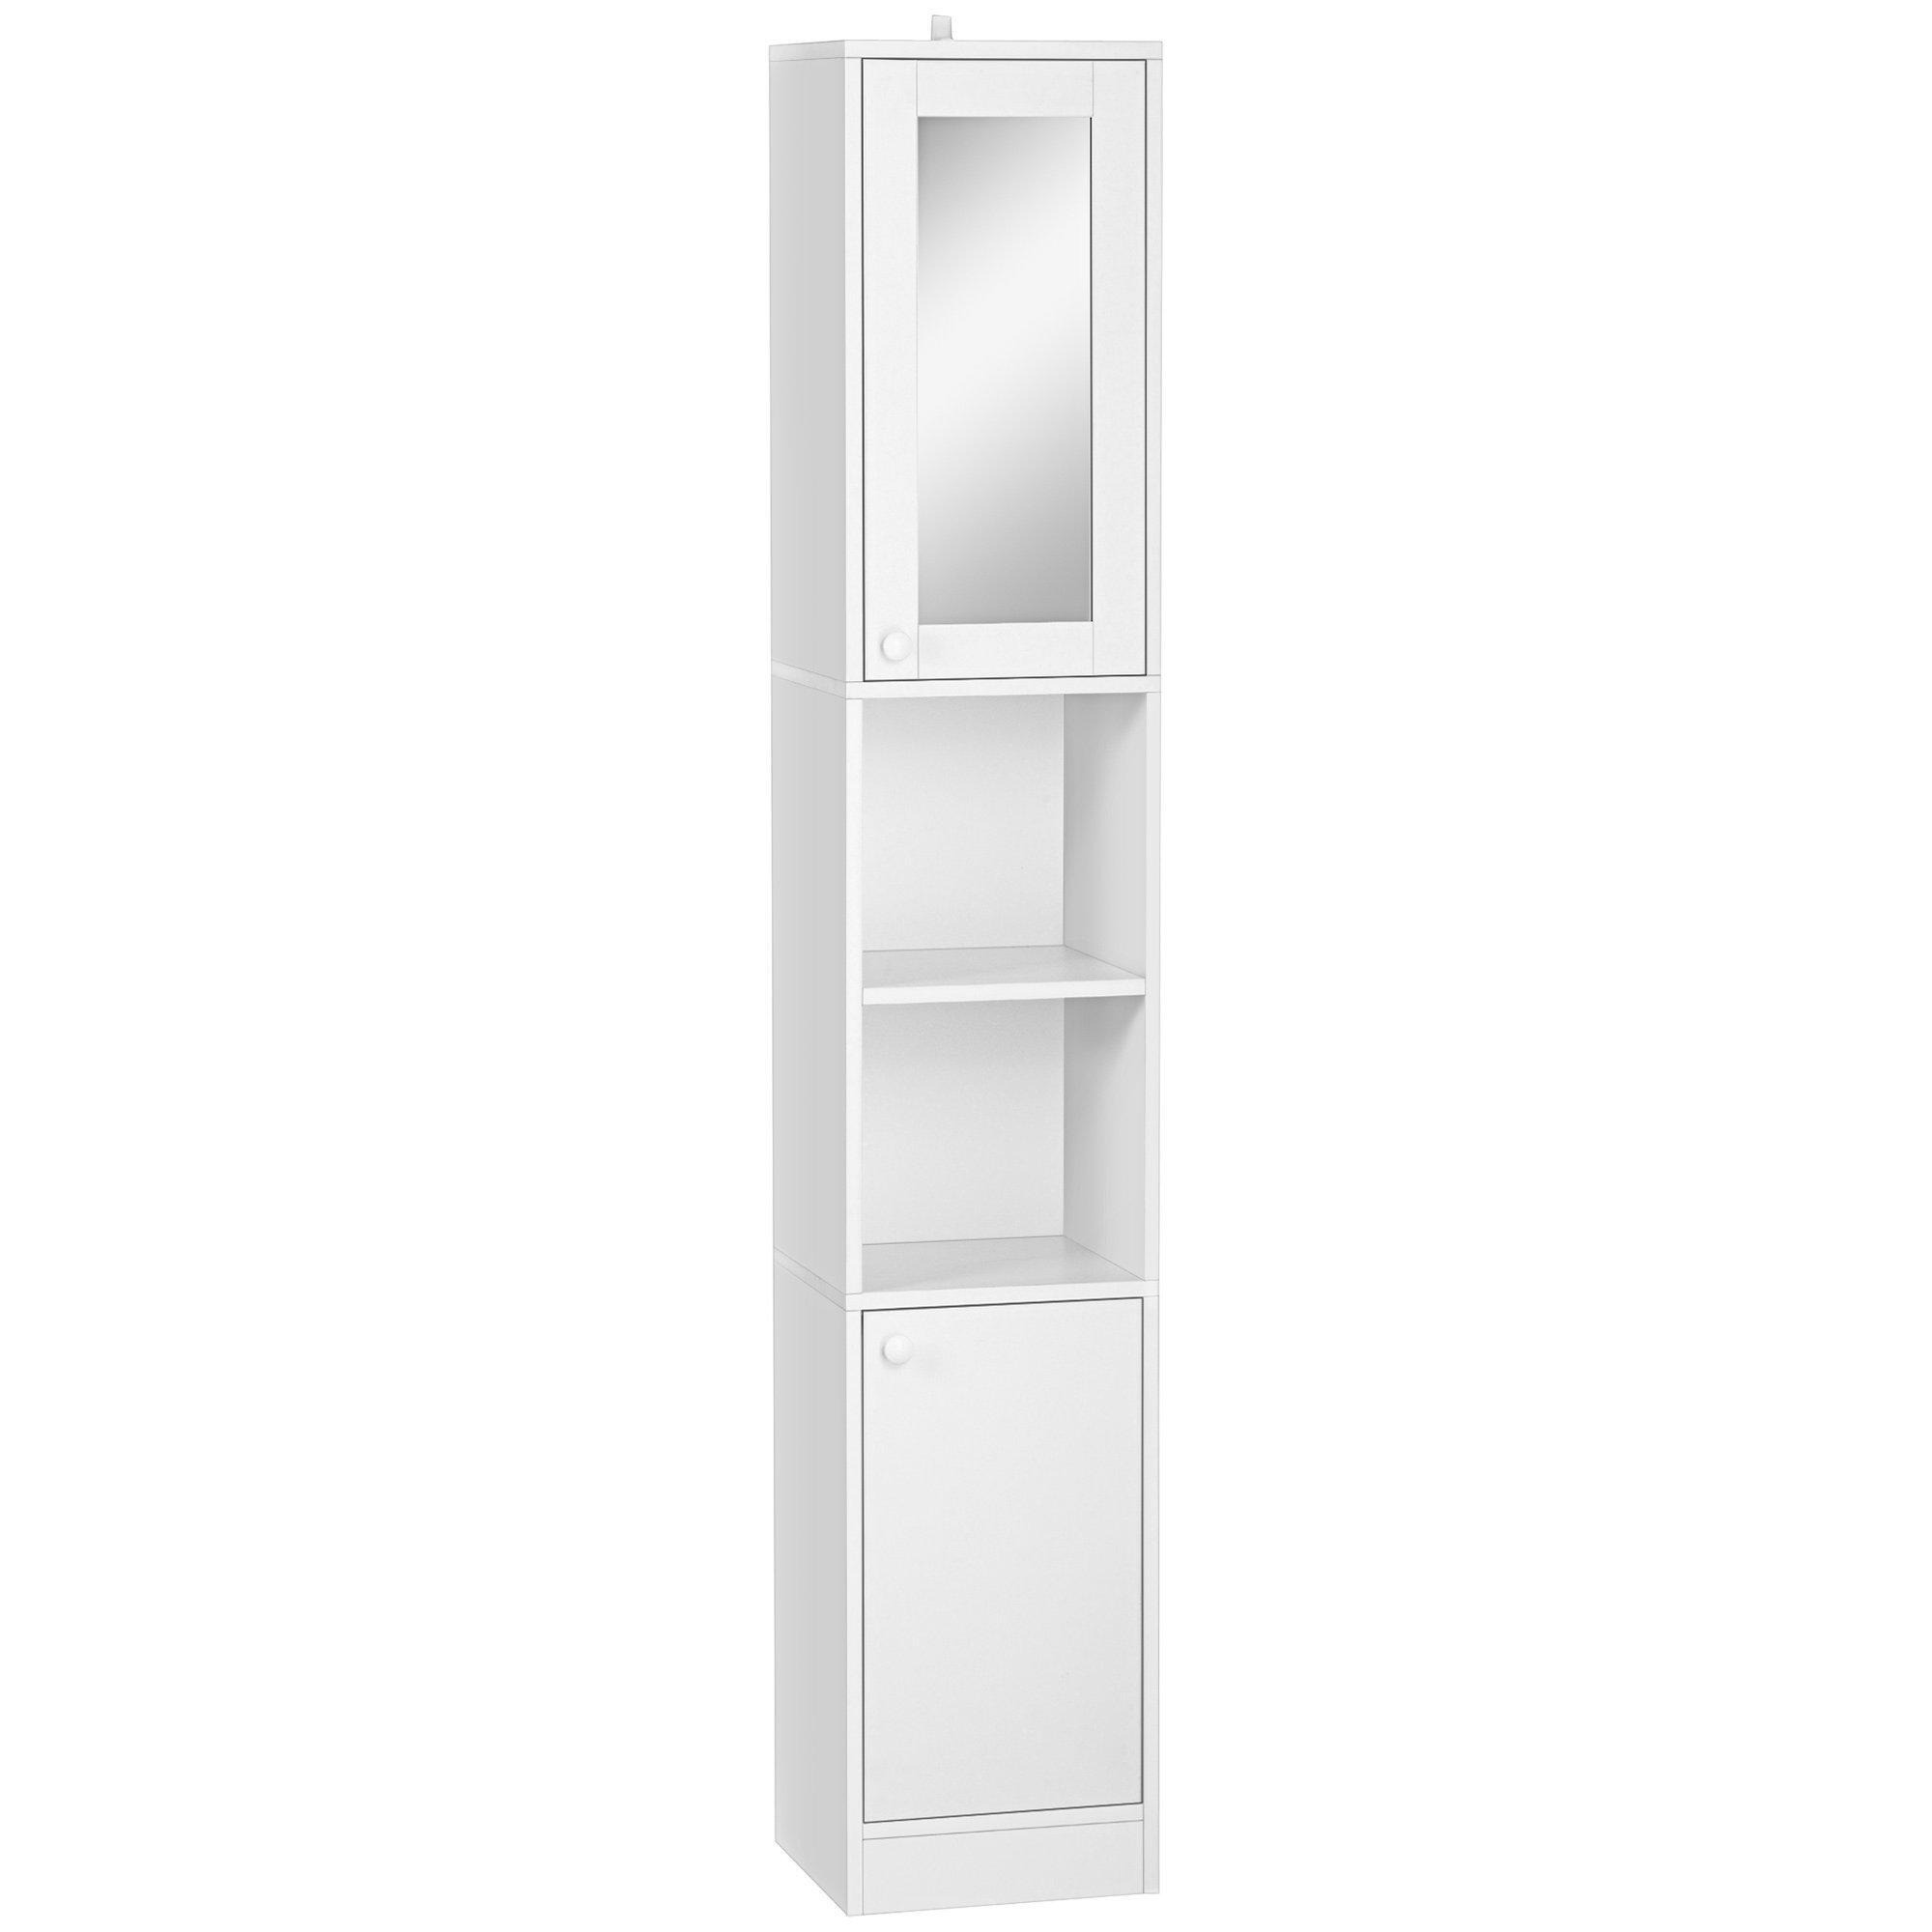 Tall Bathroom Storage Cabinet Narrow Freestanding Cabinet - image 1